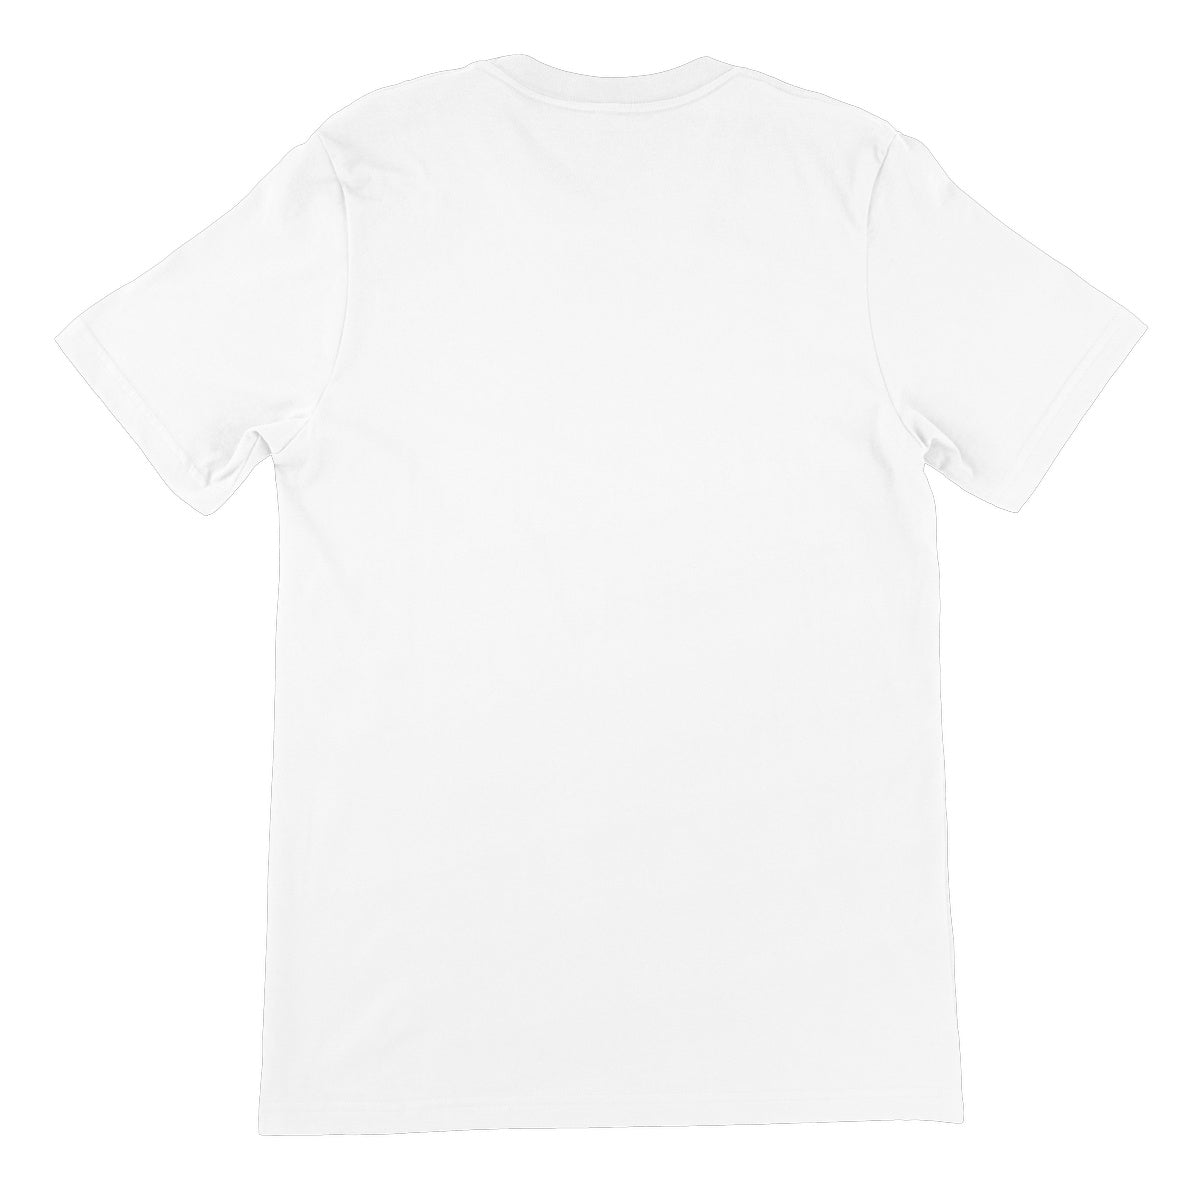 Penguin Illustrated Tee Unisex Short Sleeve T-Shirt